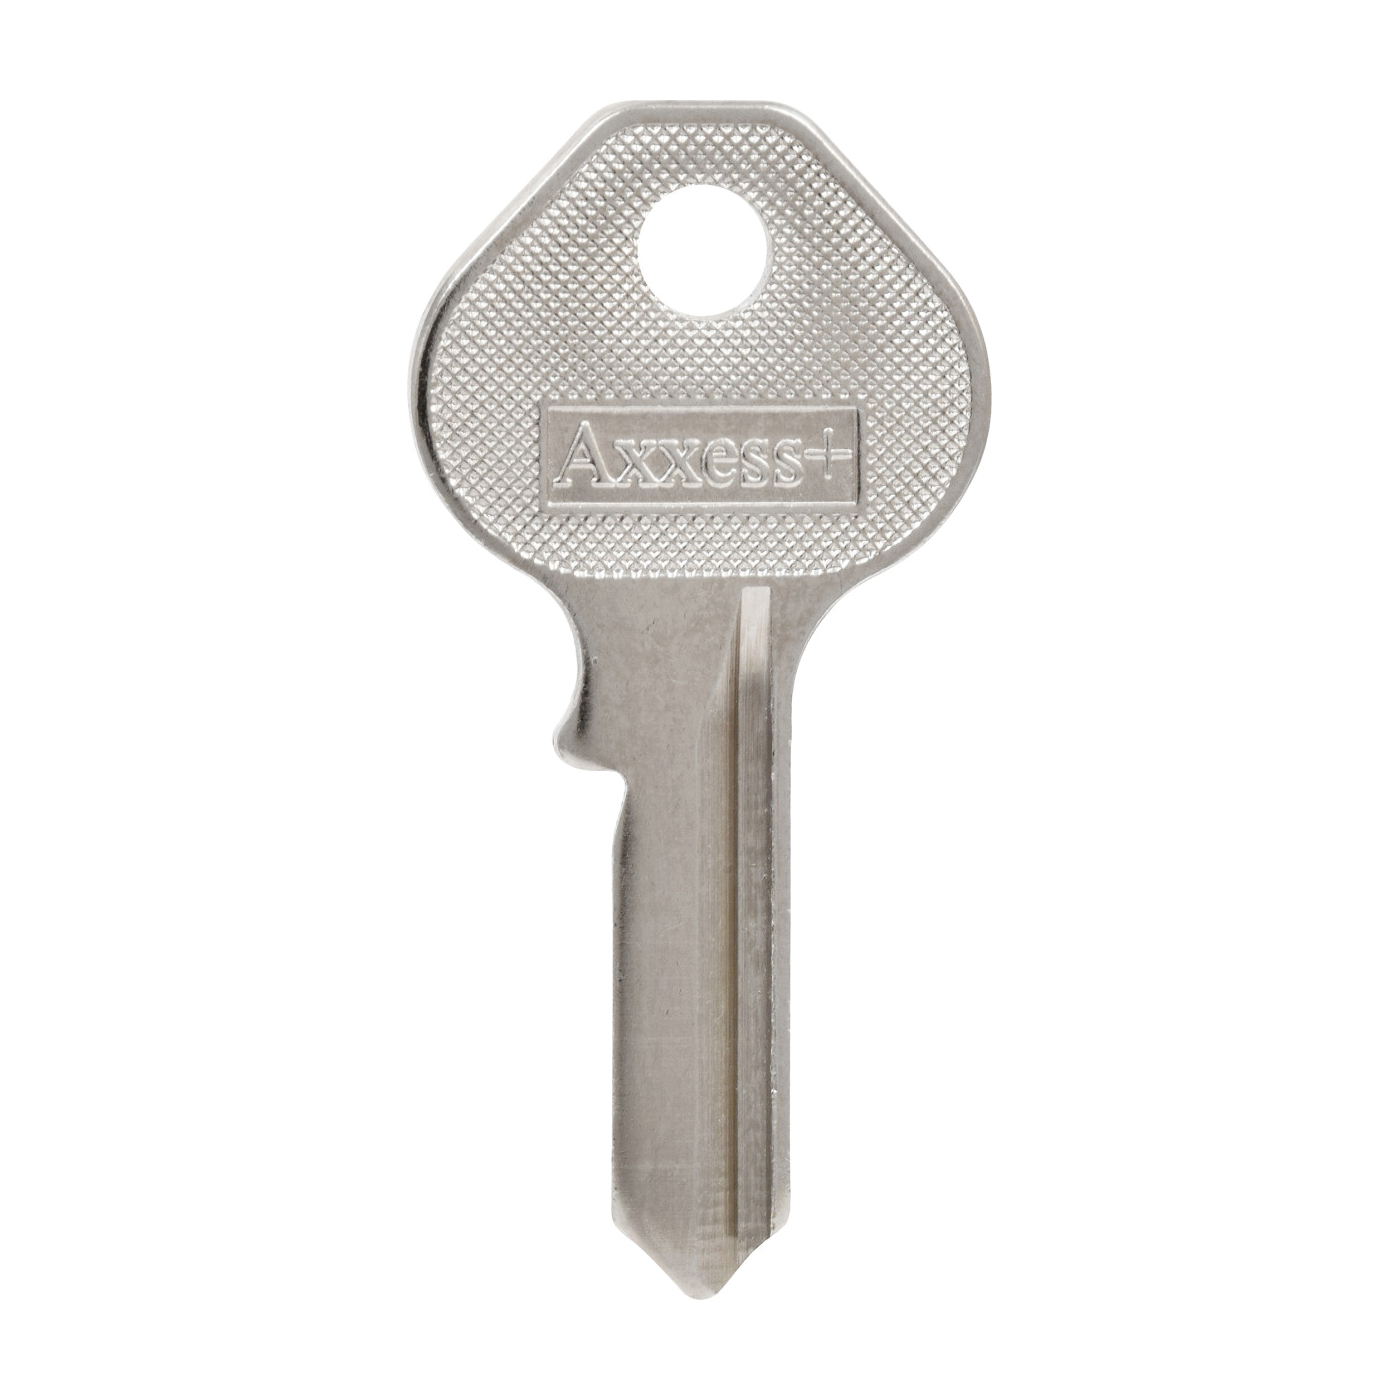 88535 Key Blank, Brass, Nickel-Plated, For: Online Locks